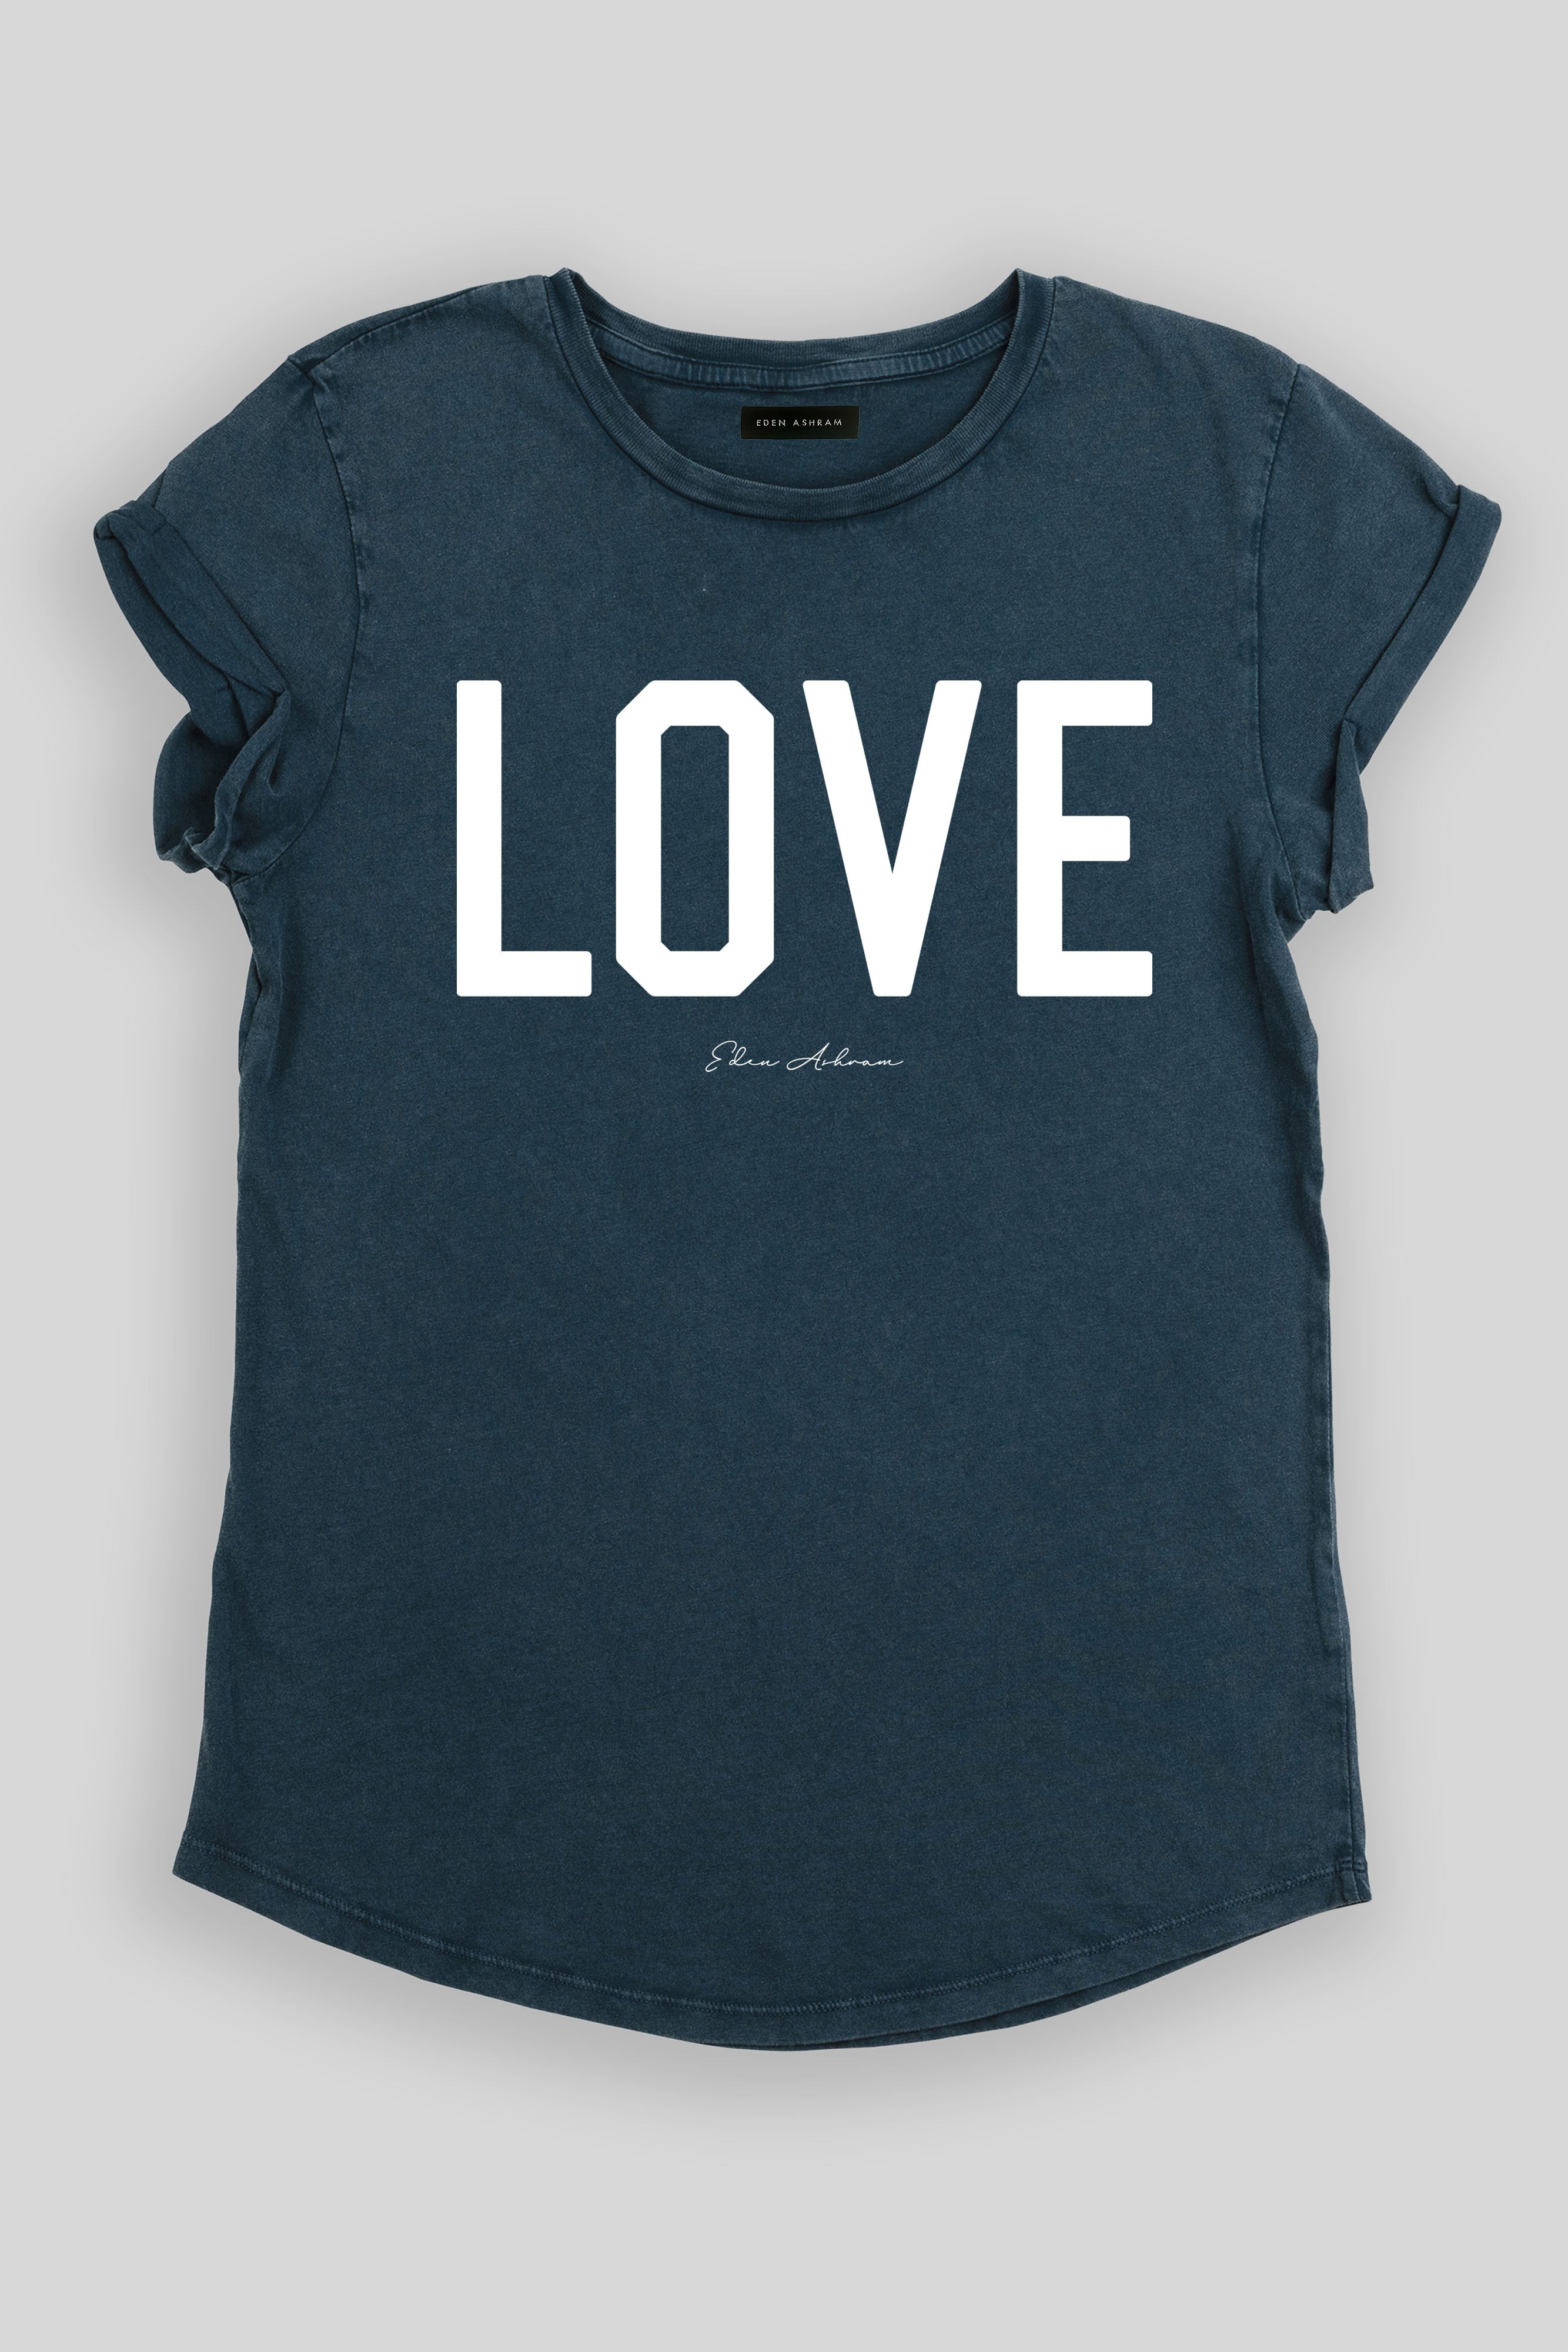 EDEN ASHRAM LOVE Premium Rolled Sleeve T-Shirt Stonewash Denim